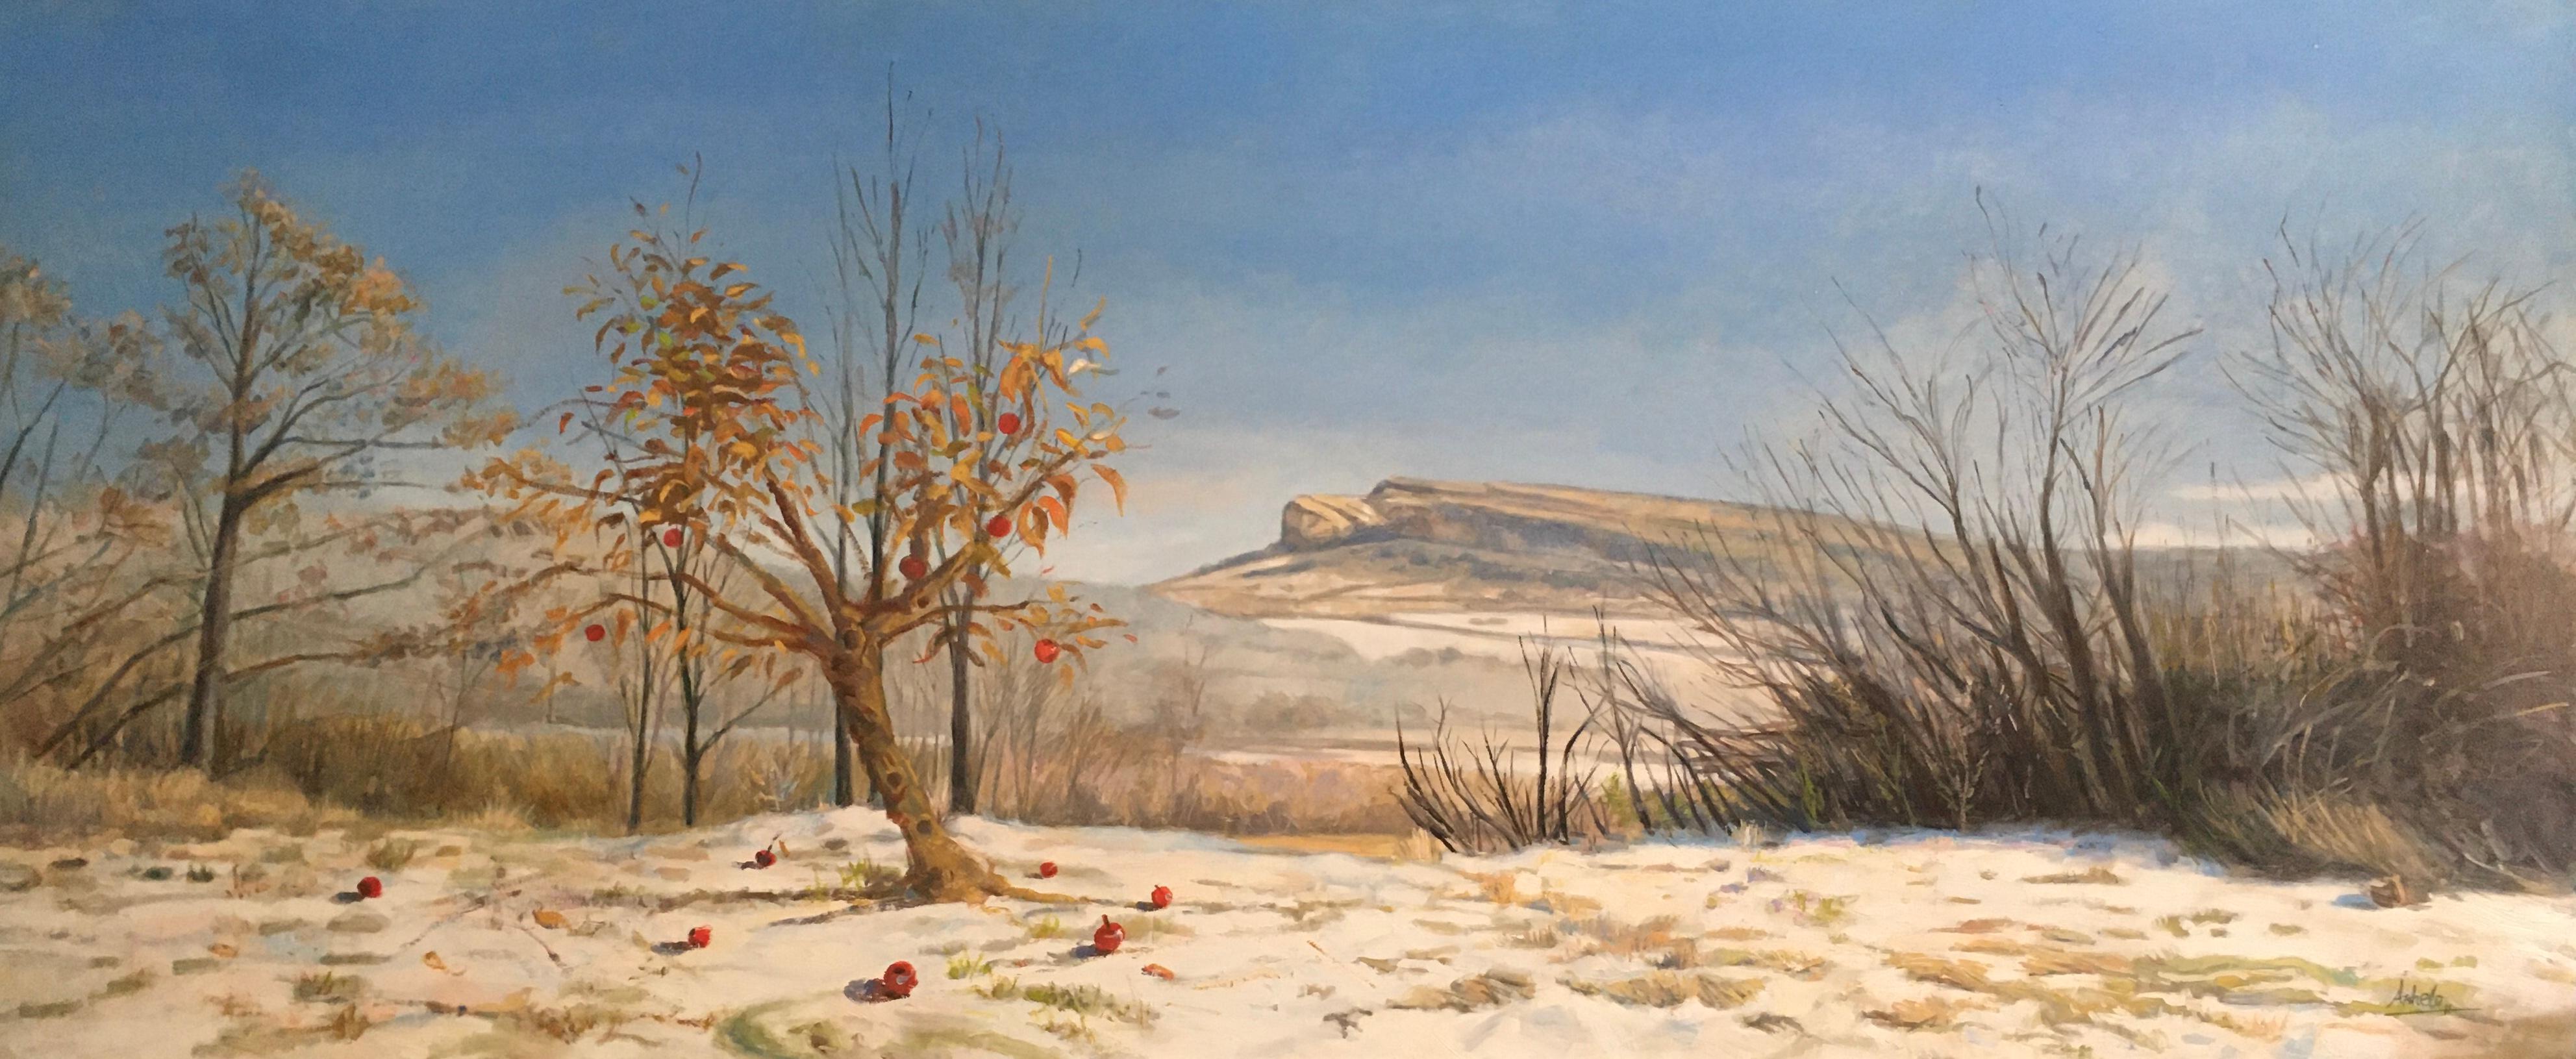 Anhelo Landscape Painting - Apples in January  Oil on panel Post-Impressionist Large Format Living Landscape